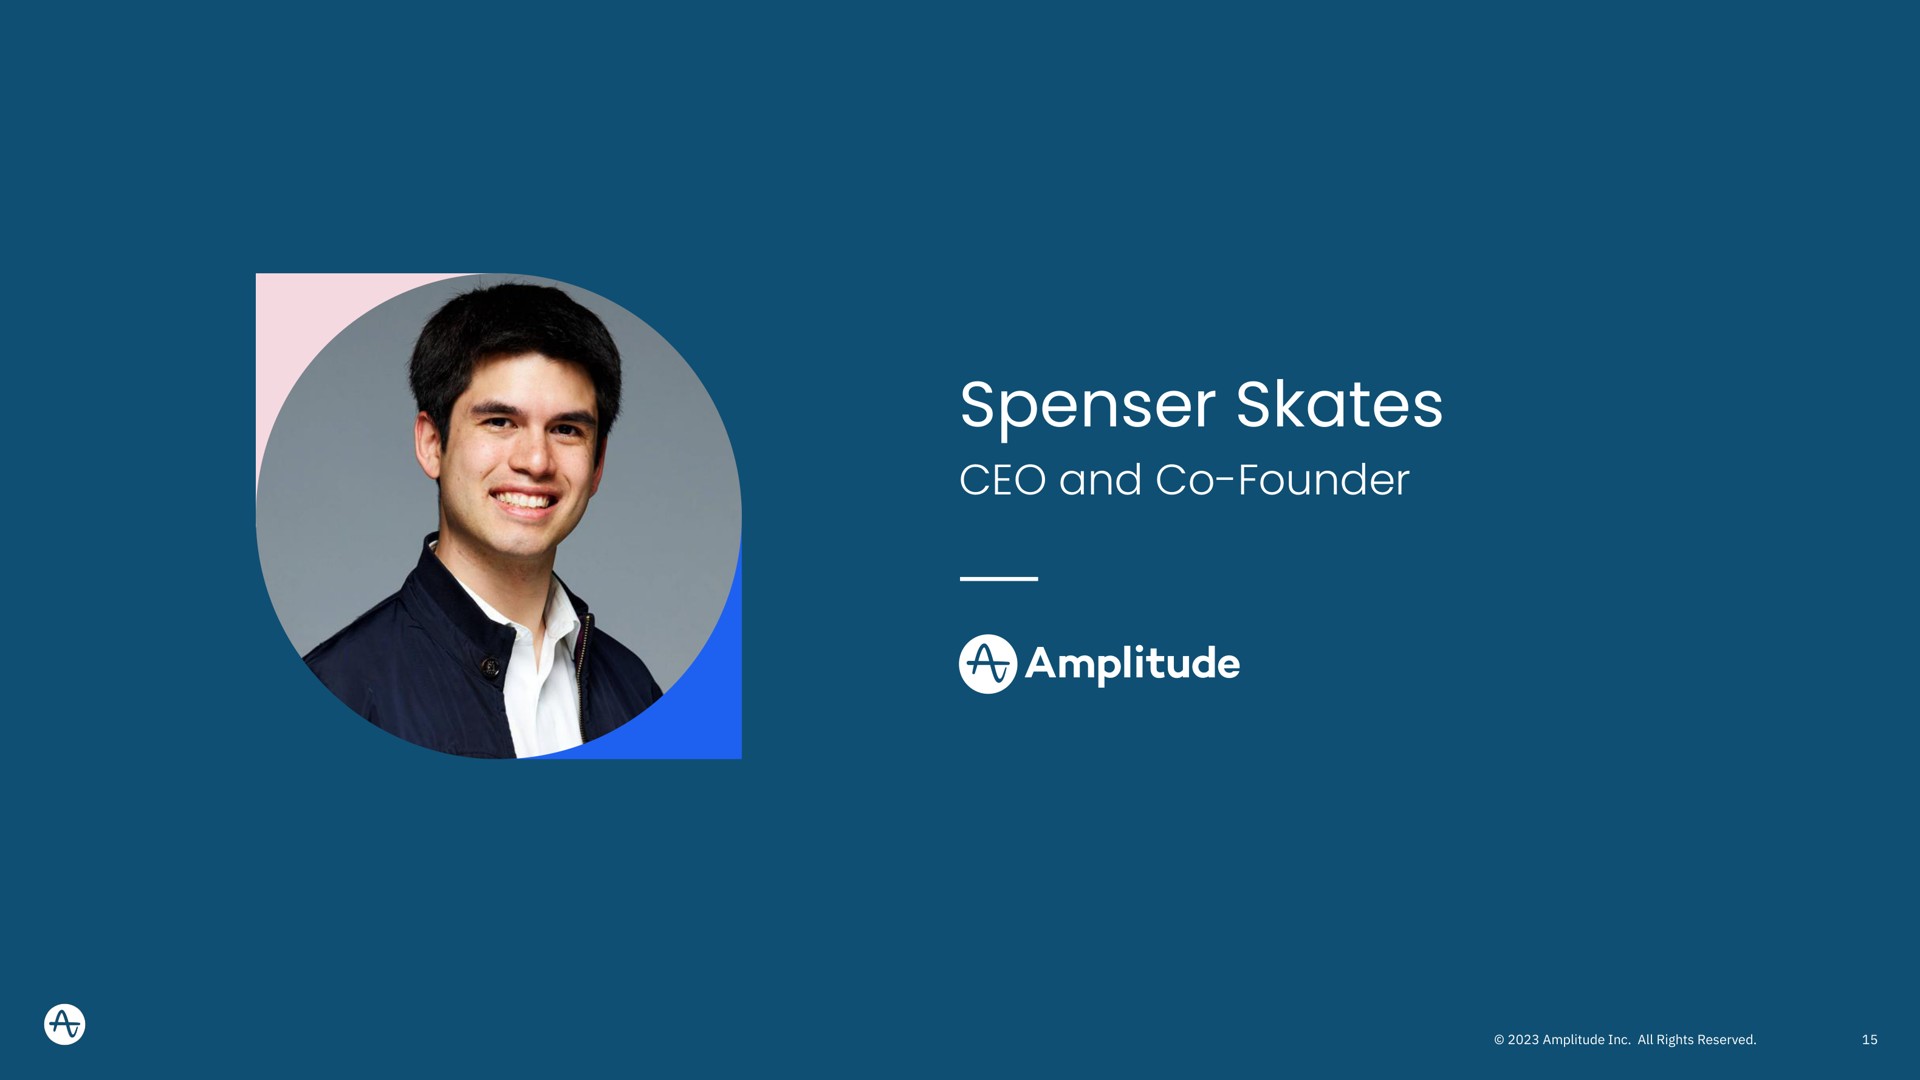 skates and founder | Amplitude